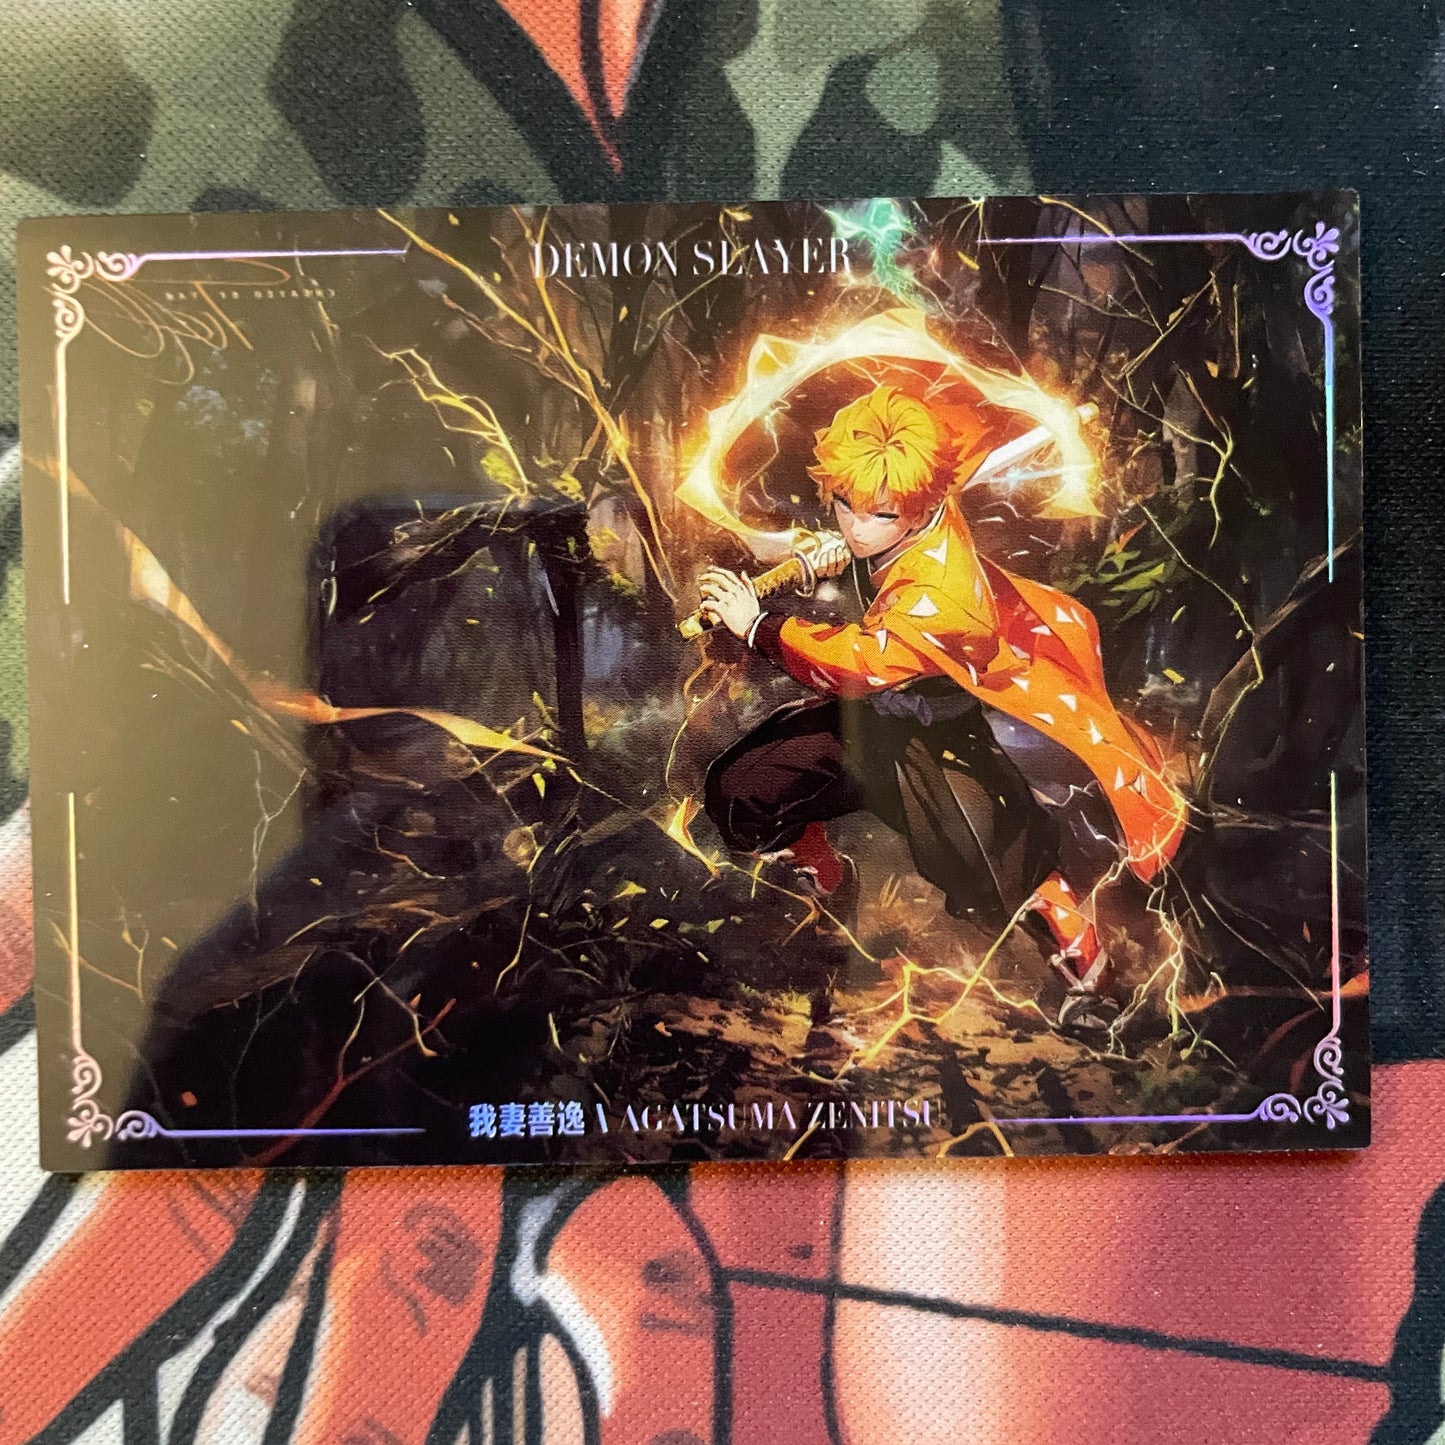 Demon Slayer - Yami Card Singles